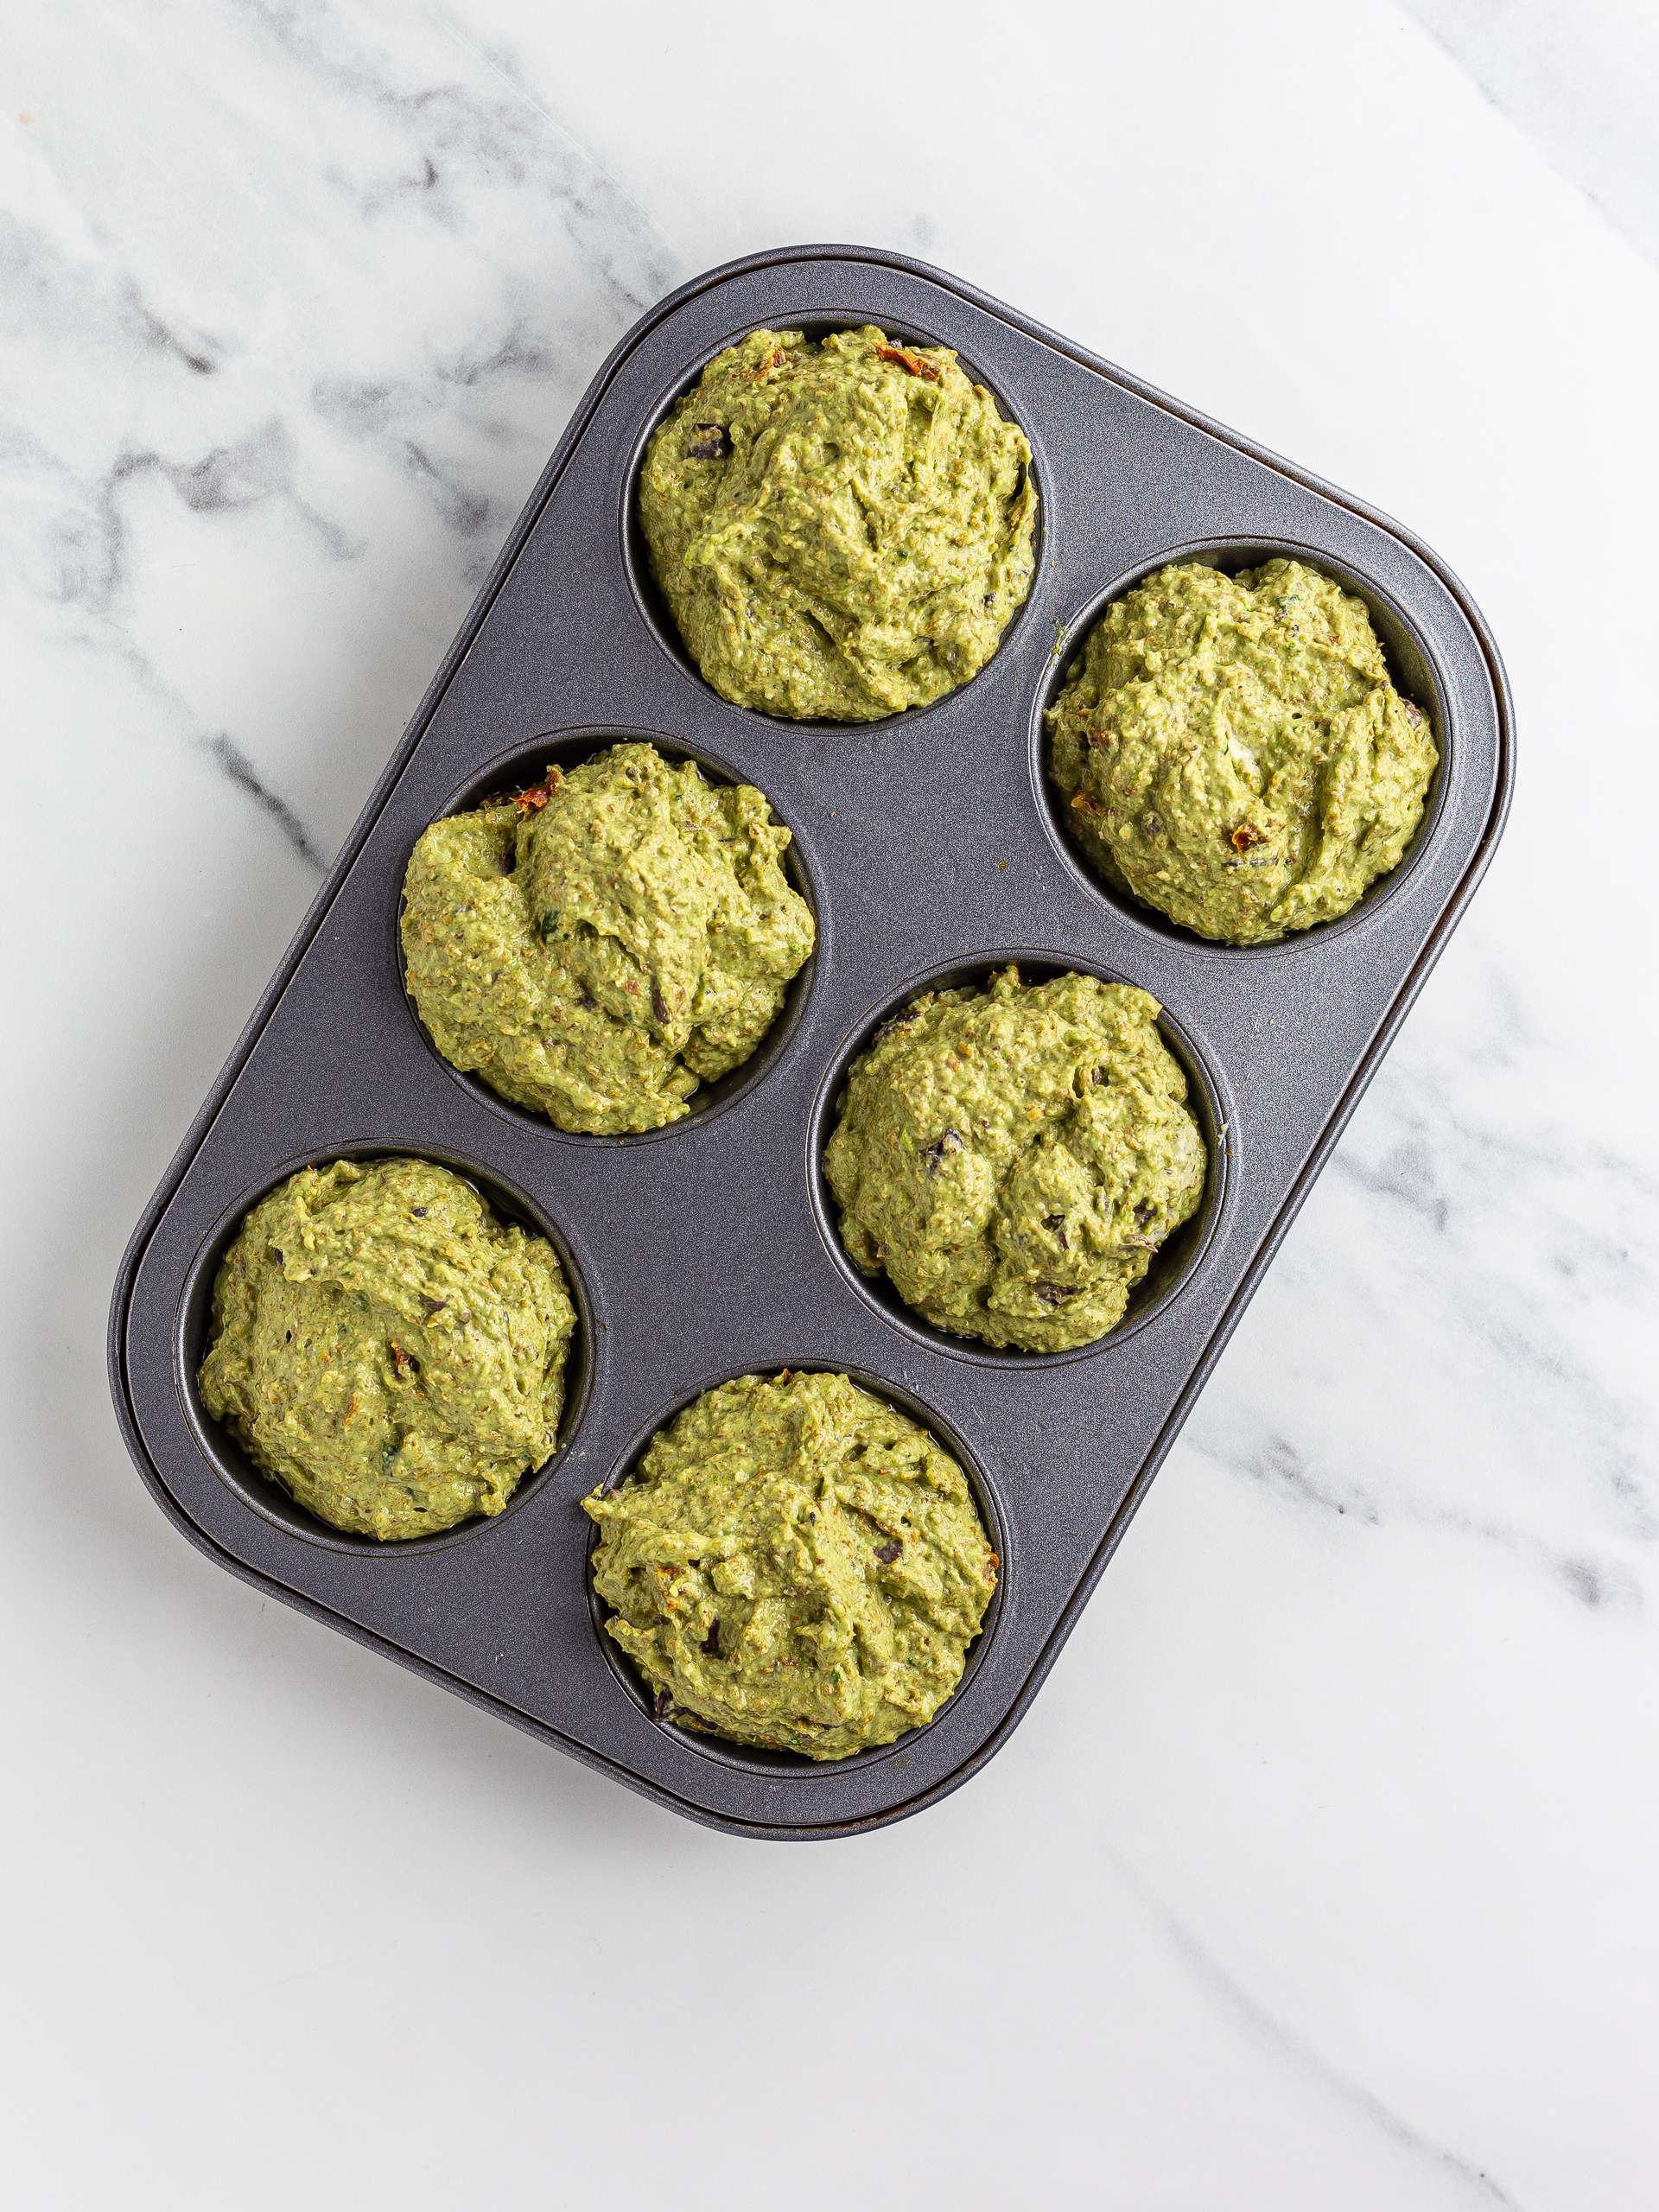 savoury vegan muffins with pesto in a muffin tin